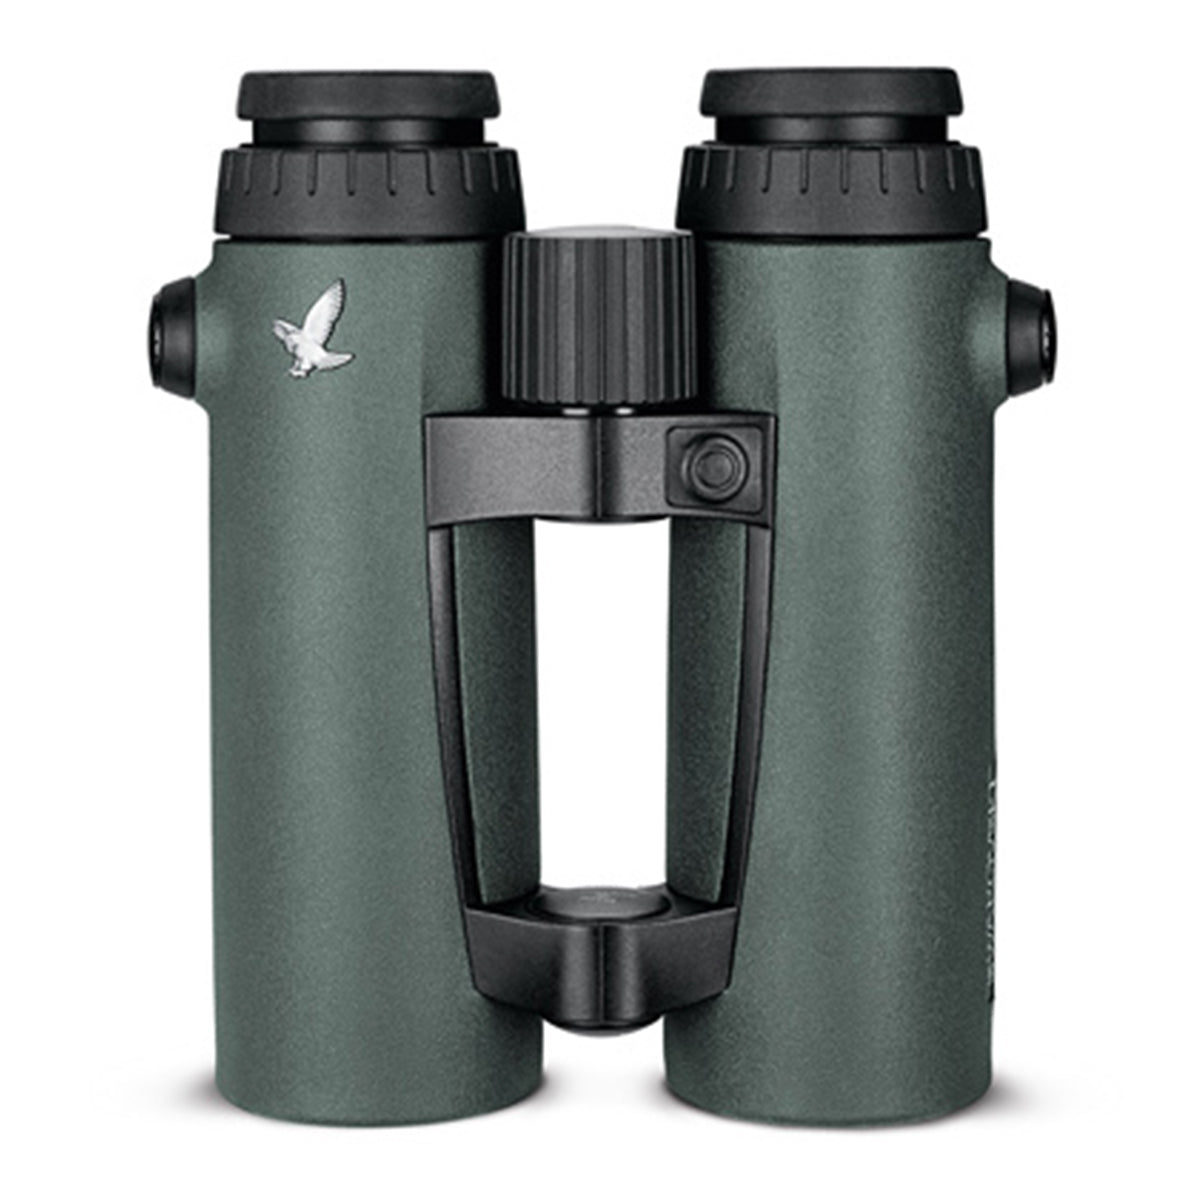 Swarovski EL Range 10x42 Rangefinding Binocular in Swarovski EL Range 10x42 Rangefinding Binocular by Swarovski Optik | Optics - goHUNT Shop by GOHUNT | Swarovski Optik - GOHUNT Shop